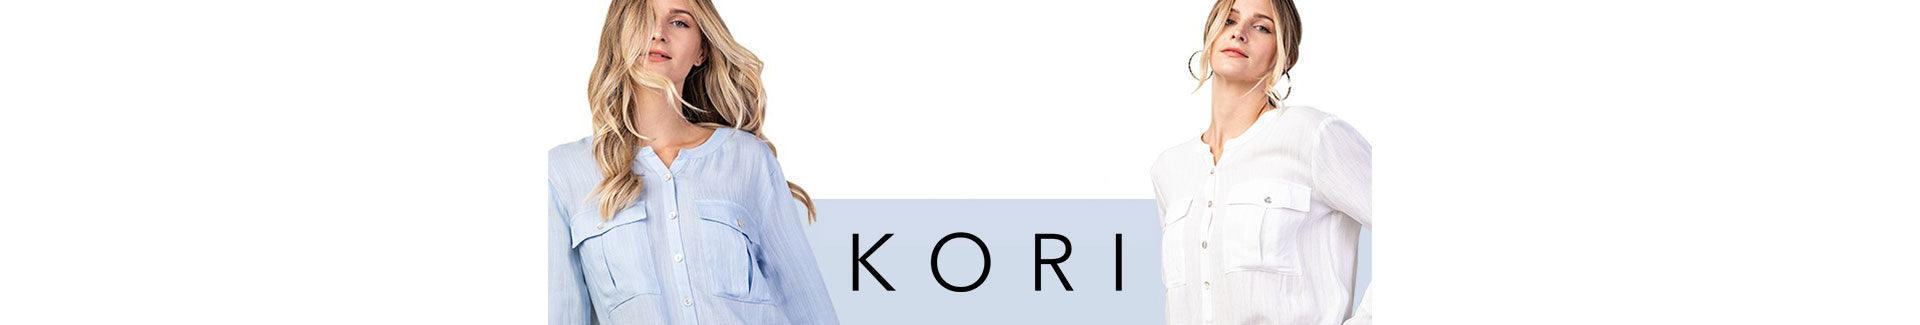 Buy Kori America Clothing On Sale - Daily Fashion